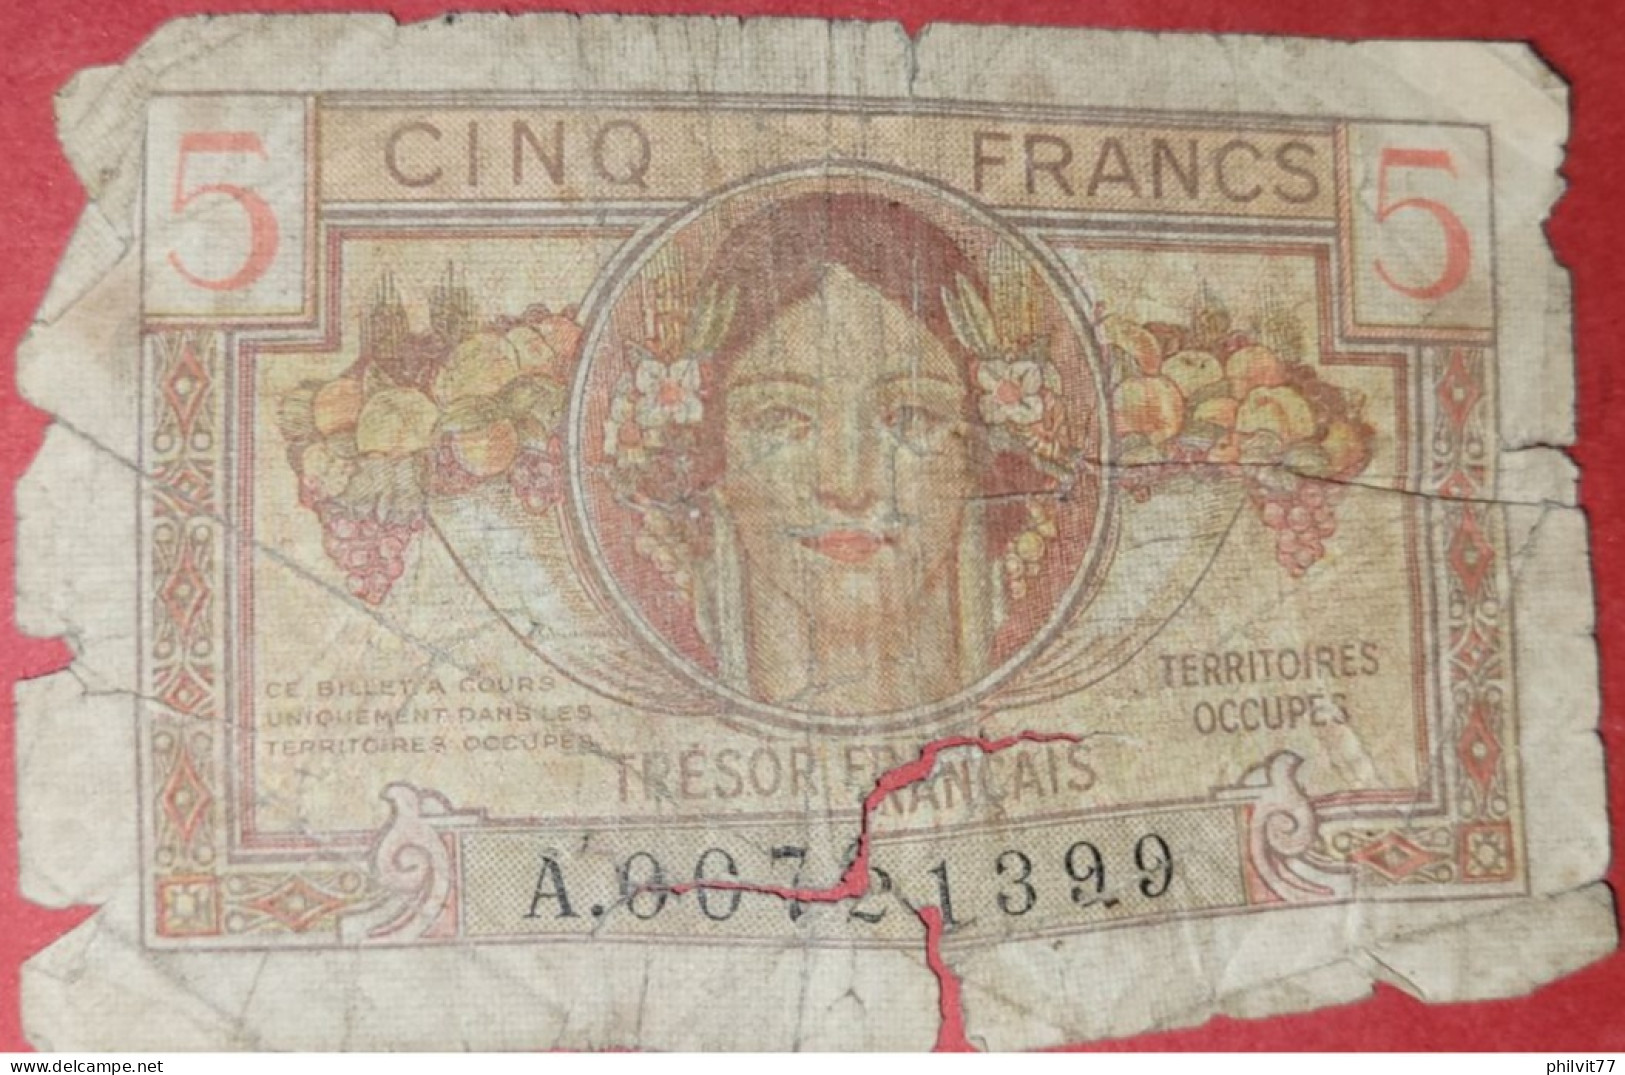 Cinq Francs Territoires Occupés Trésor Français 1947 - 1947 French Treasury